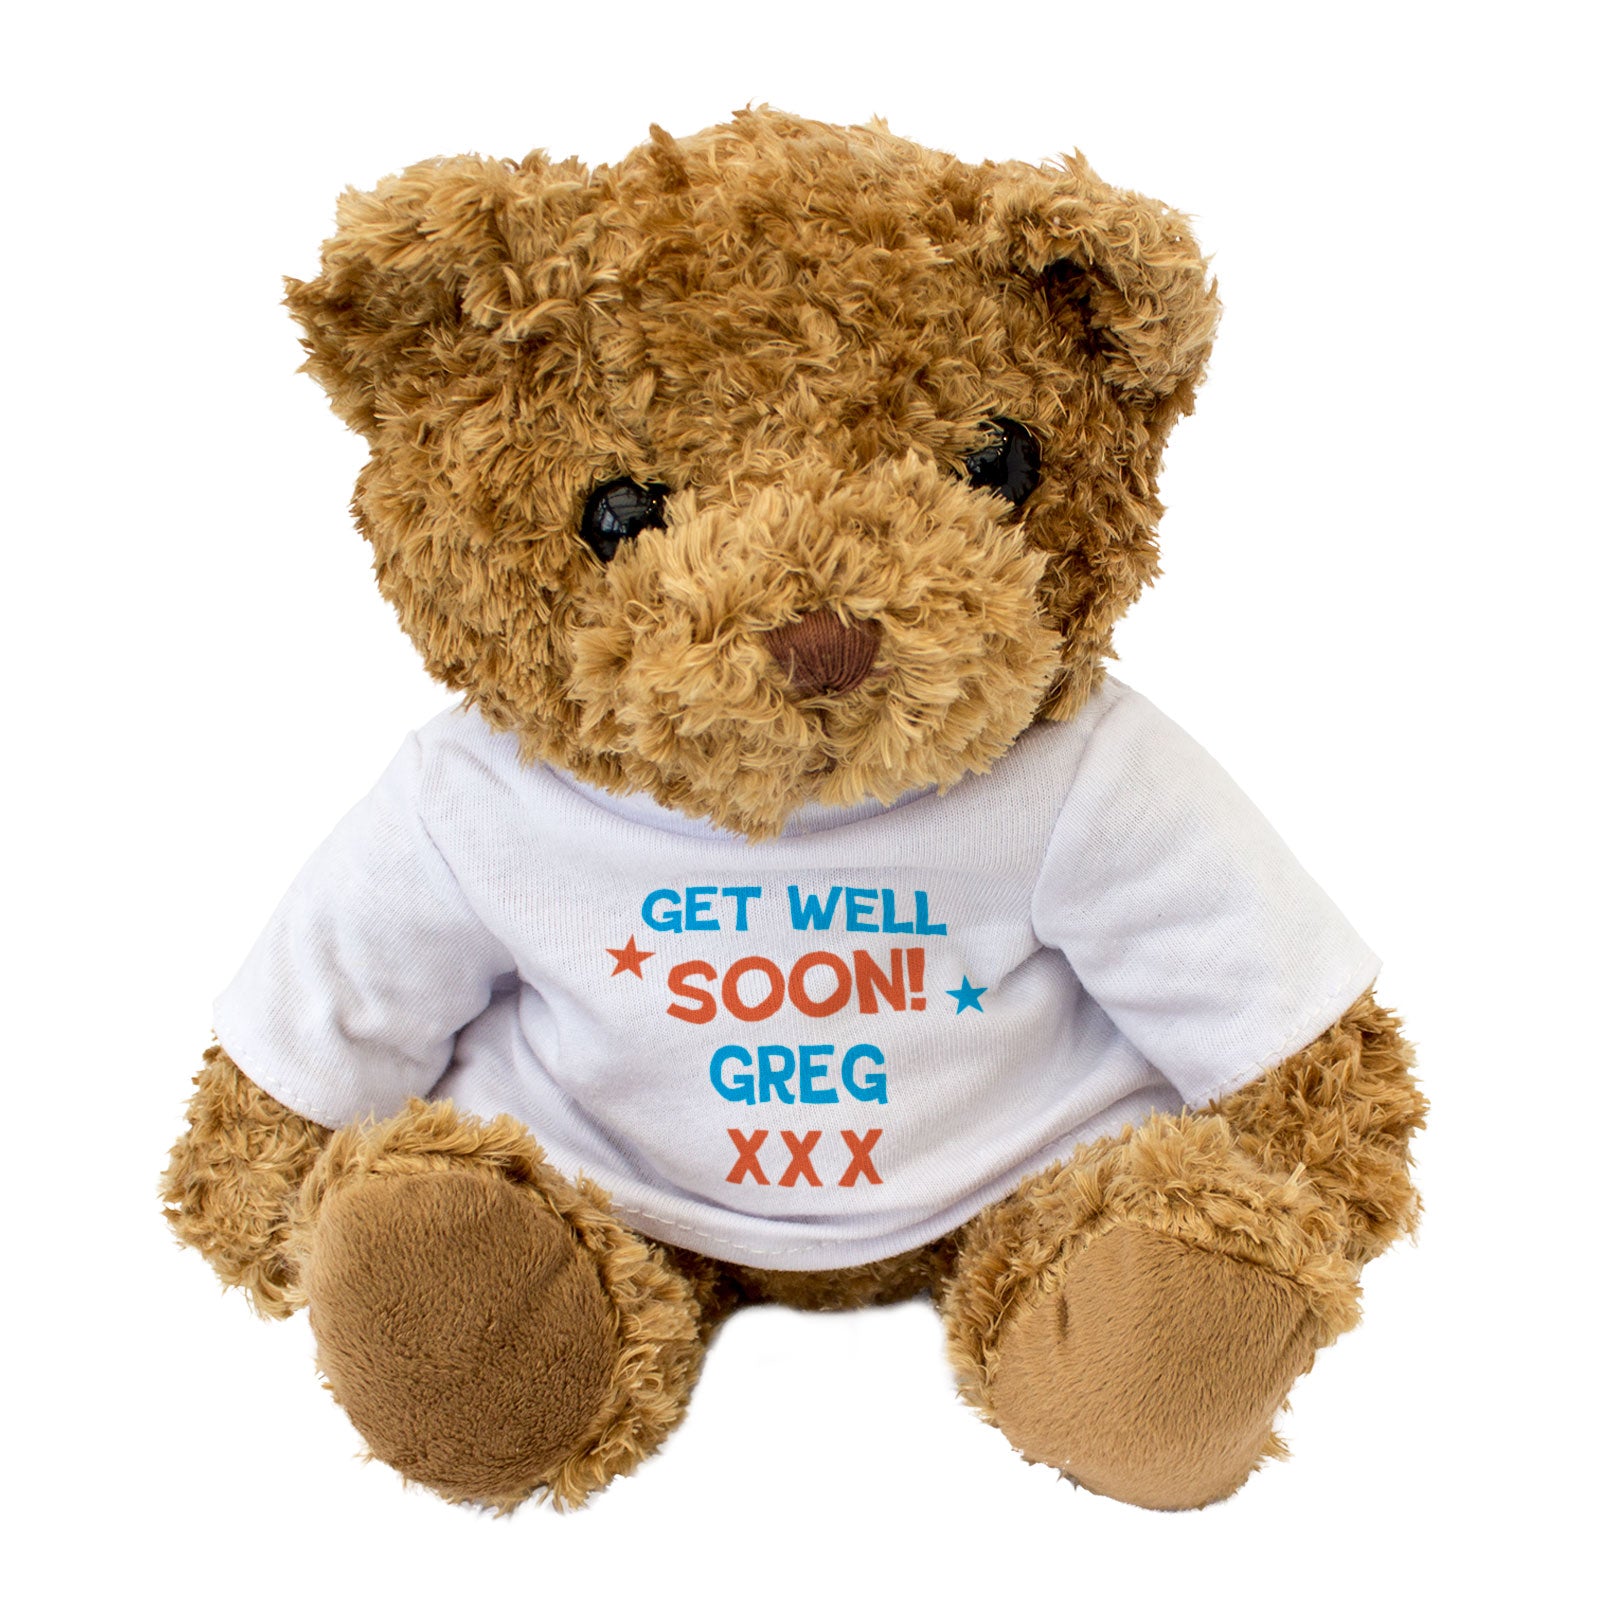 Get Well Soon Greg - Teddy Bear